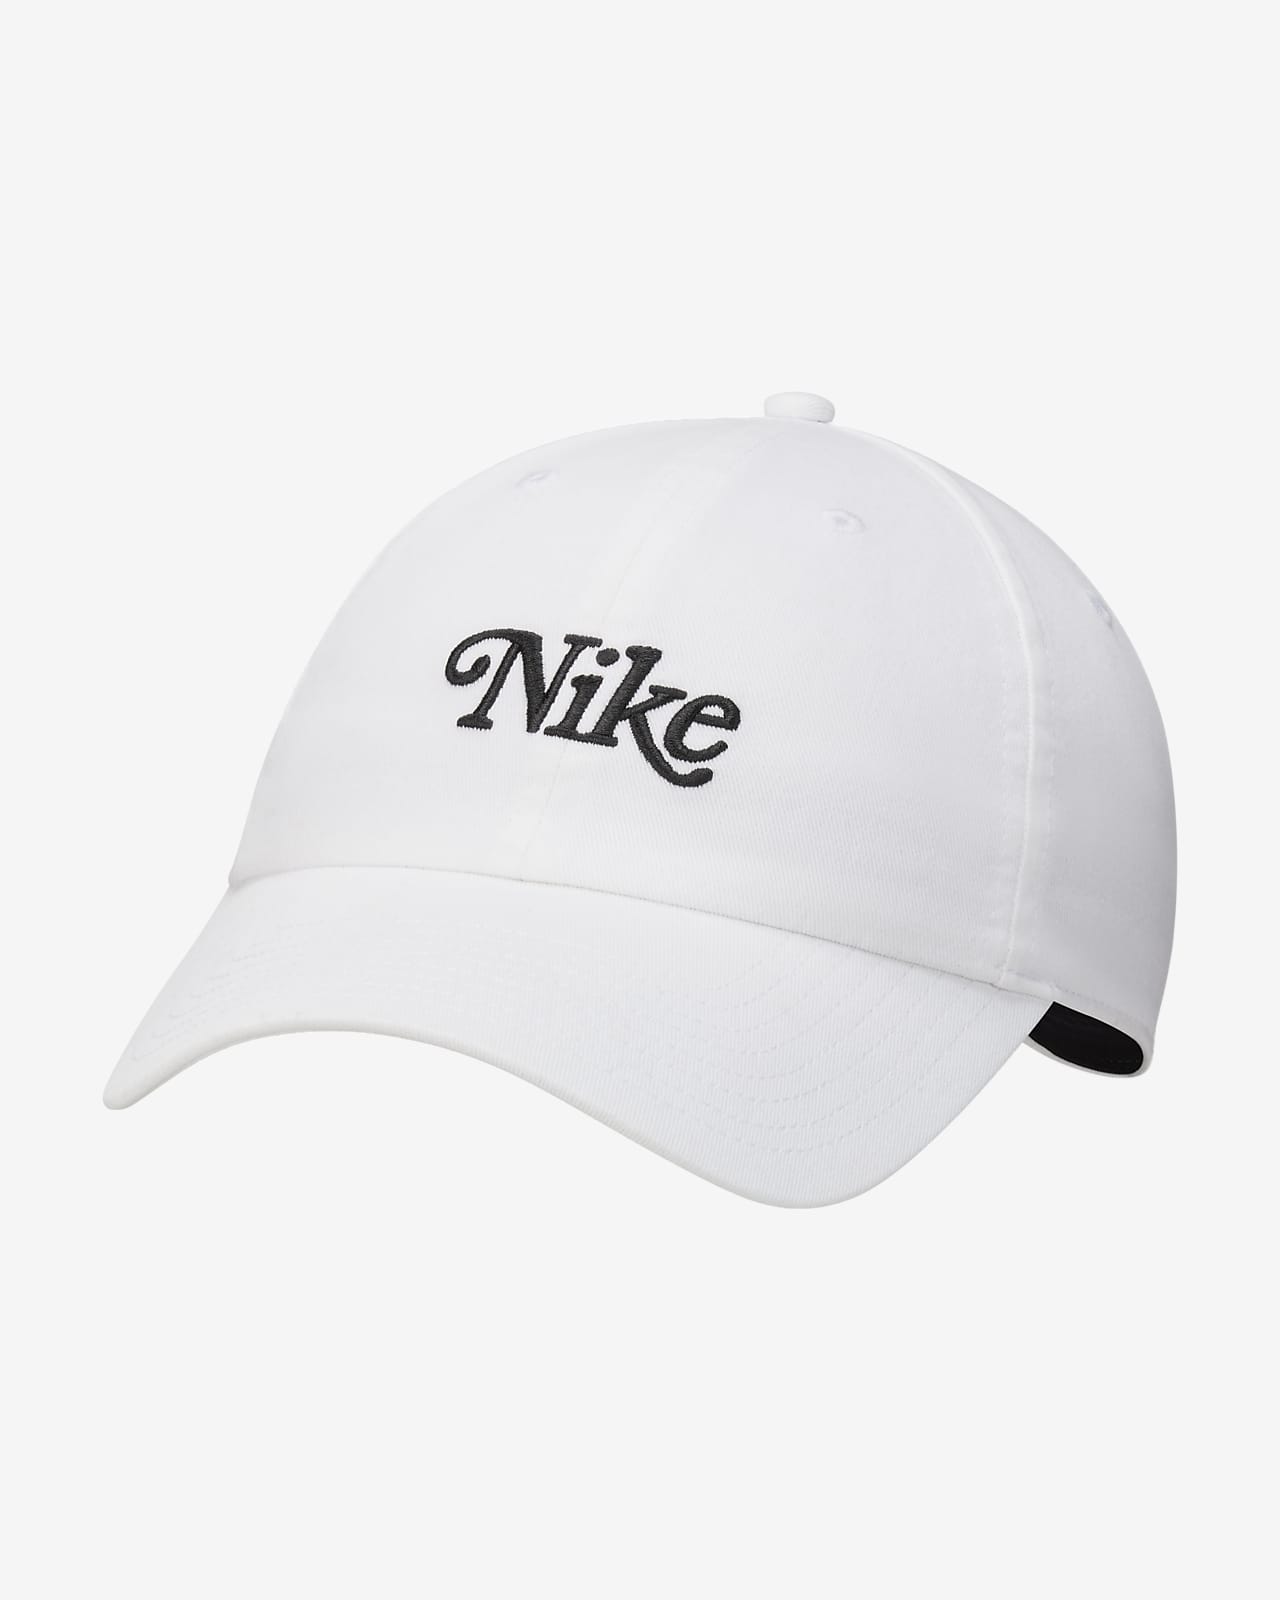 NEW Nike Heritage 86 Black/White Adjustable Golf Hat/Cap 